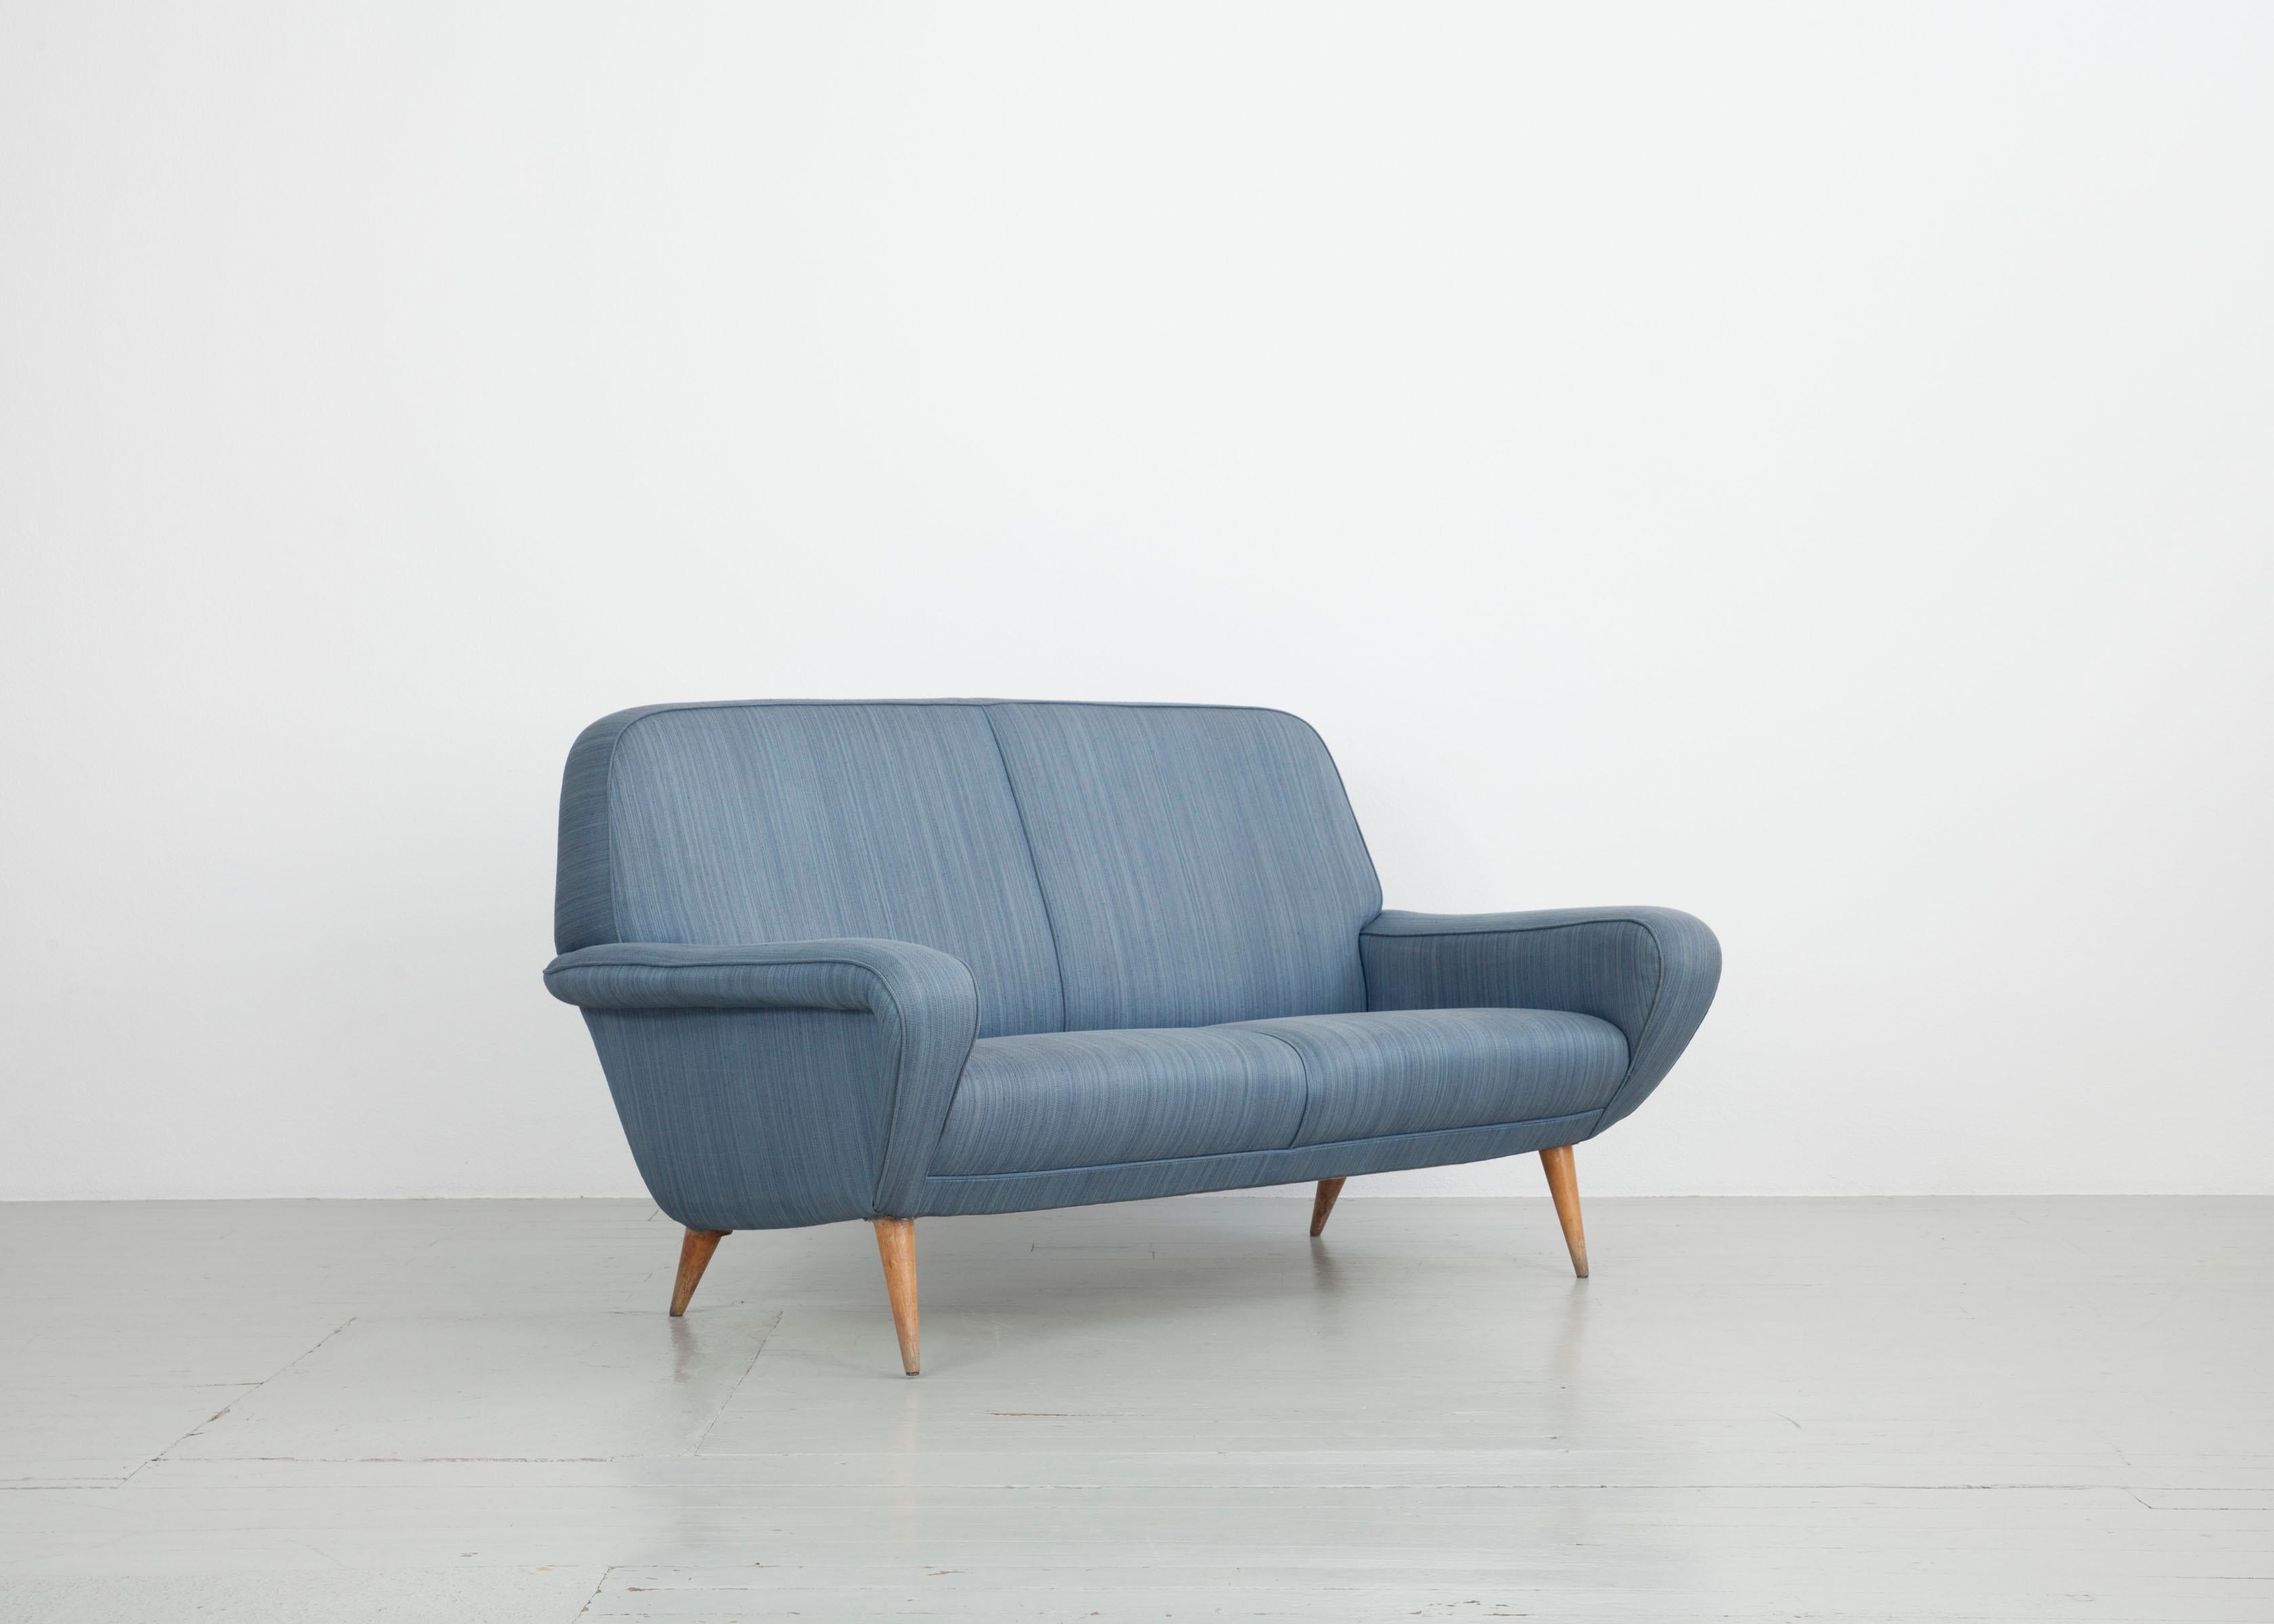 2-Sitz-Sofa Modell „830“, Design Gianfranco Frattini, Cassina, 1950er Jahre (Moderne der Mitte des Jahrhunderts) im Angebot